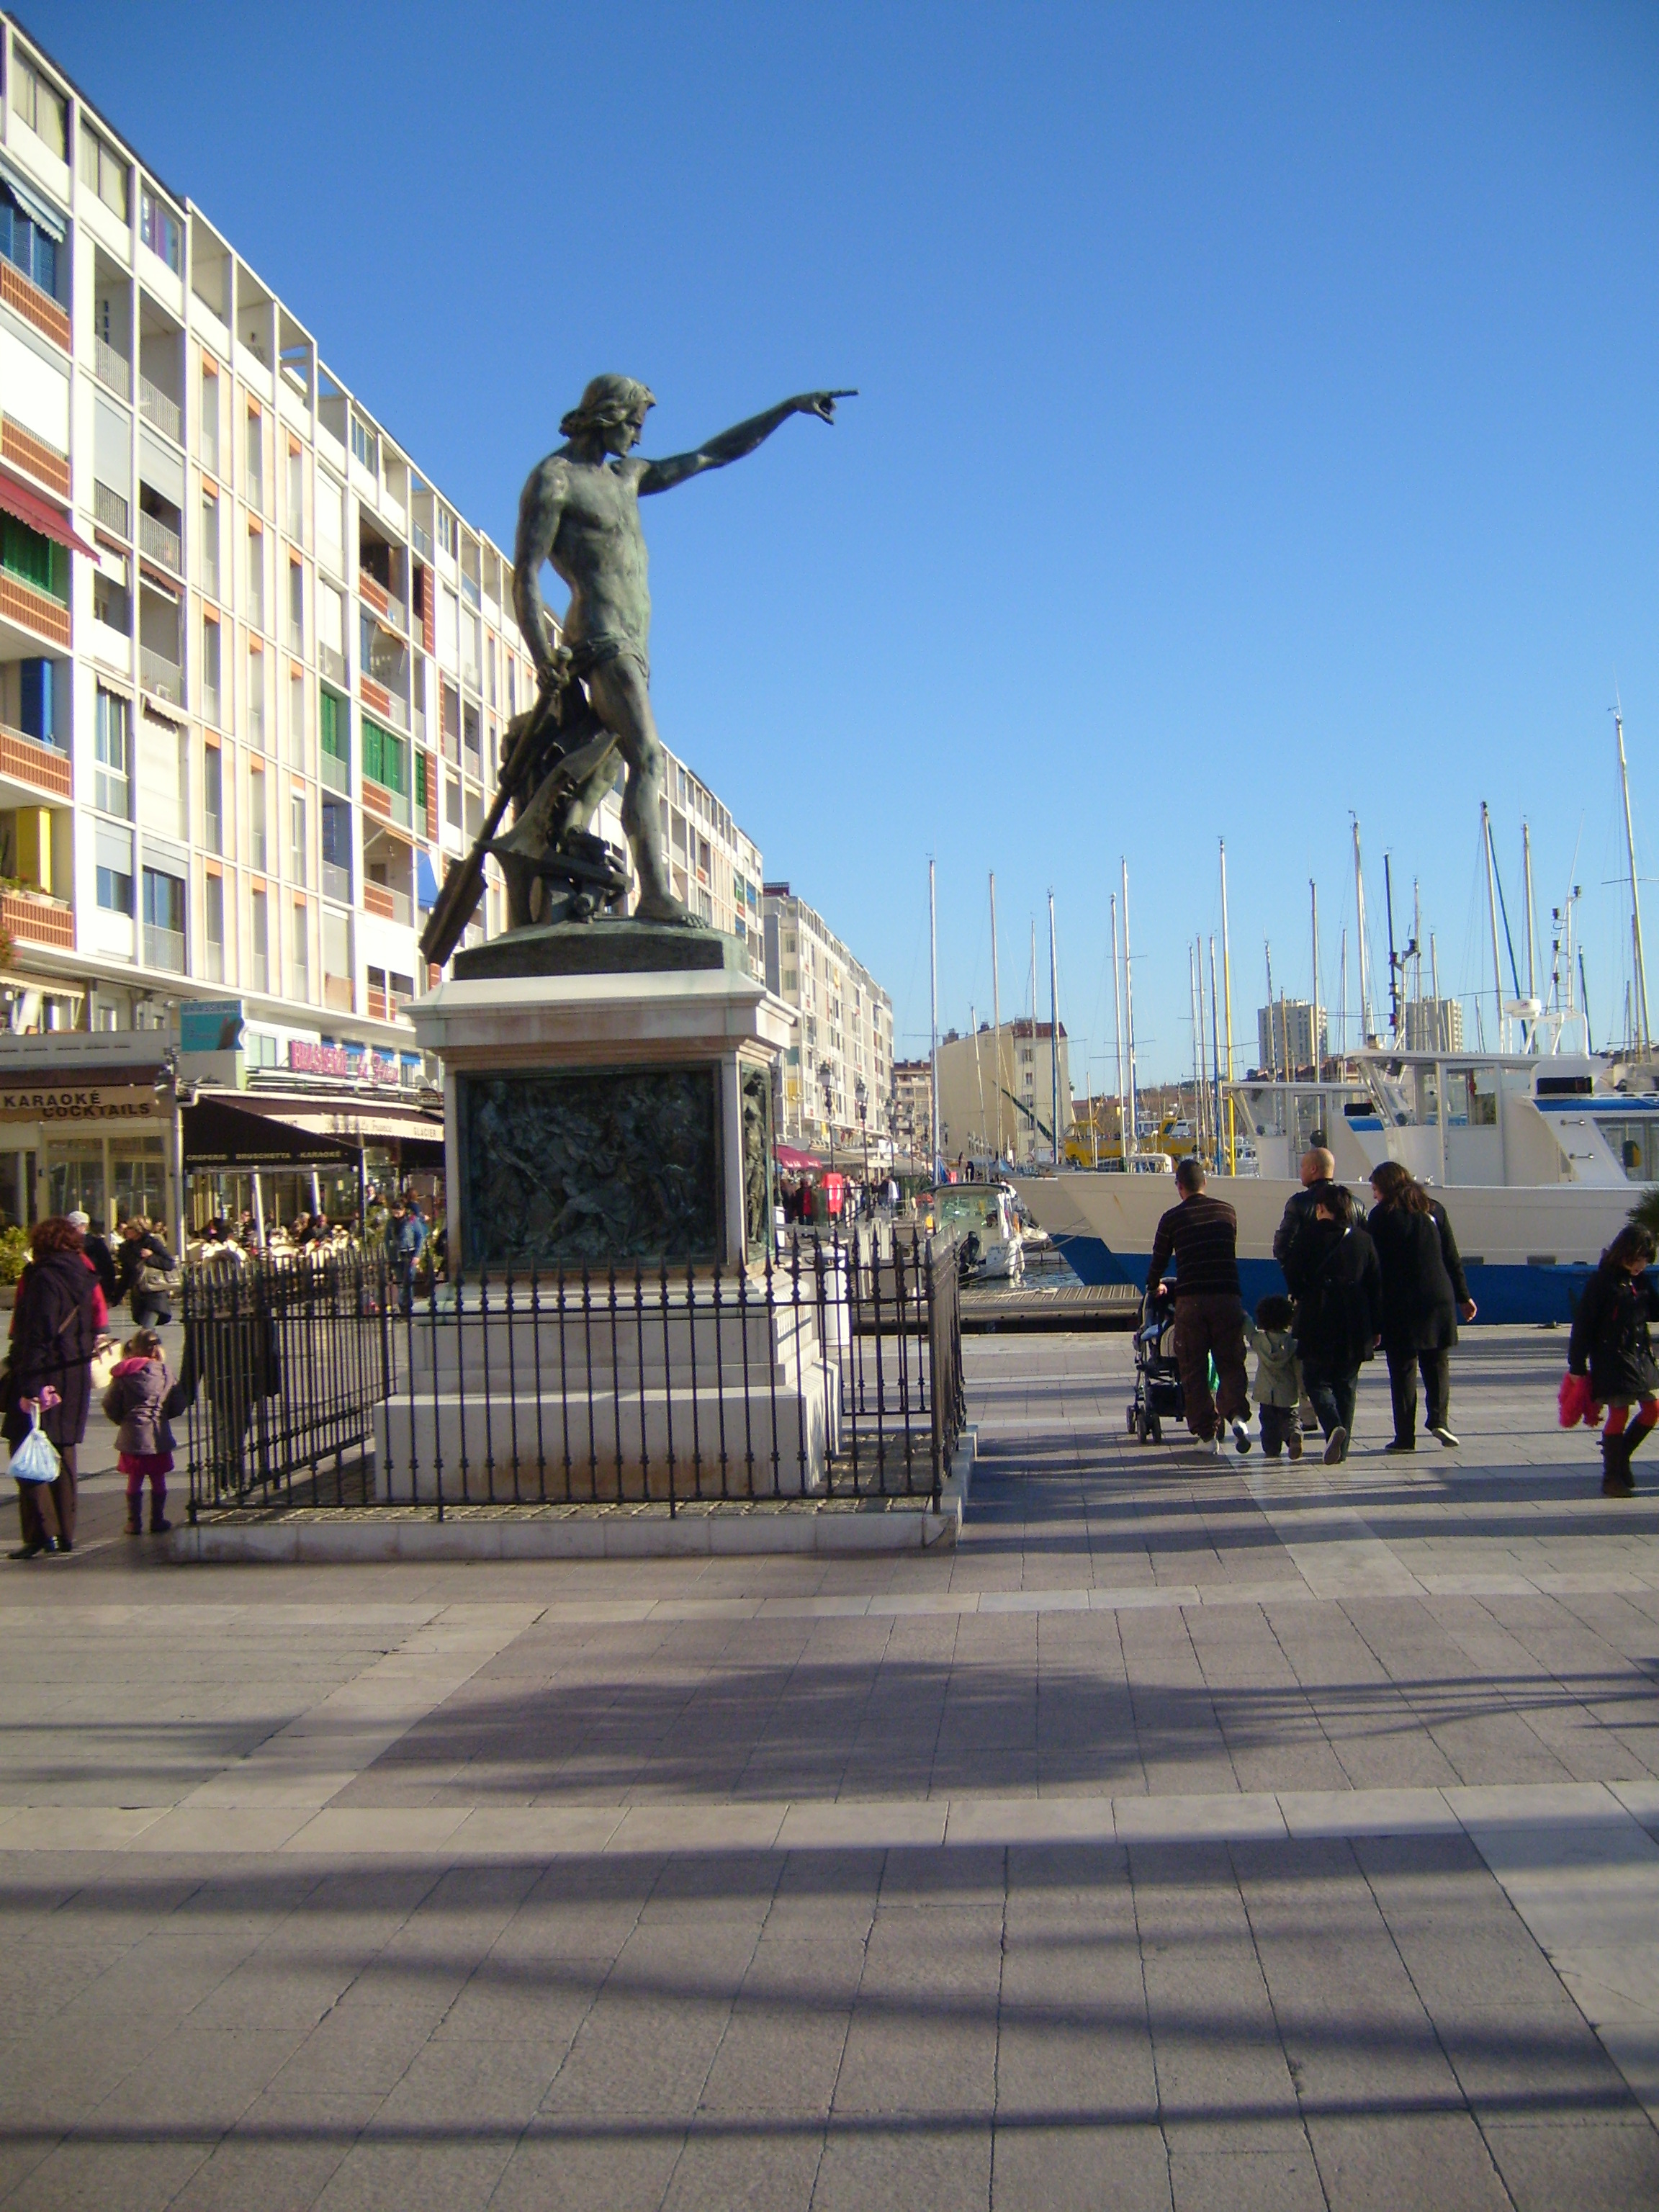 File:Toulon Port Statue.jpg - Wikimedia Commons